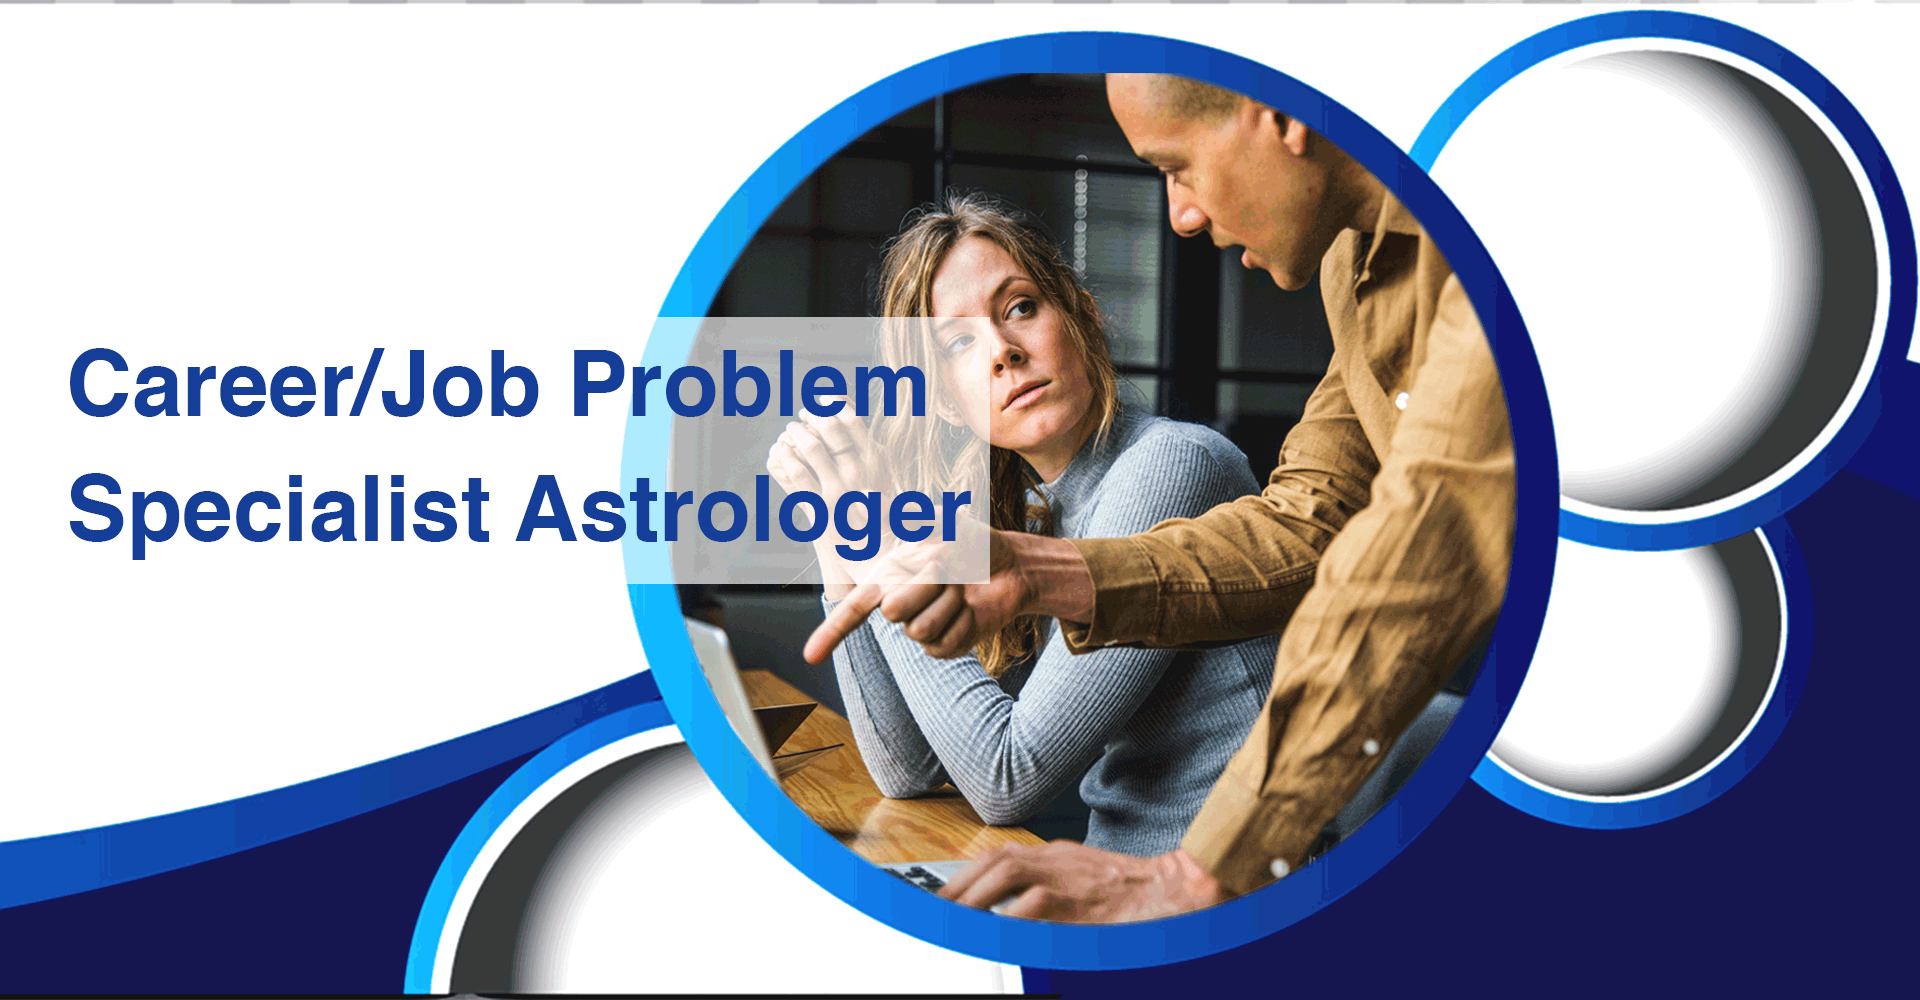 Career problem specialist astrologer in London,UK